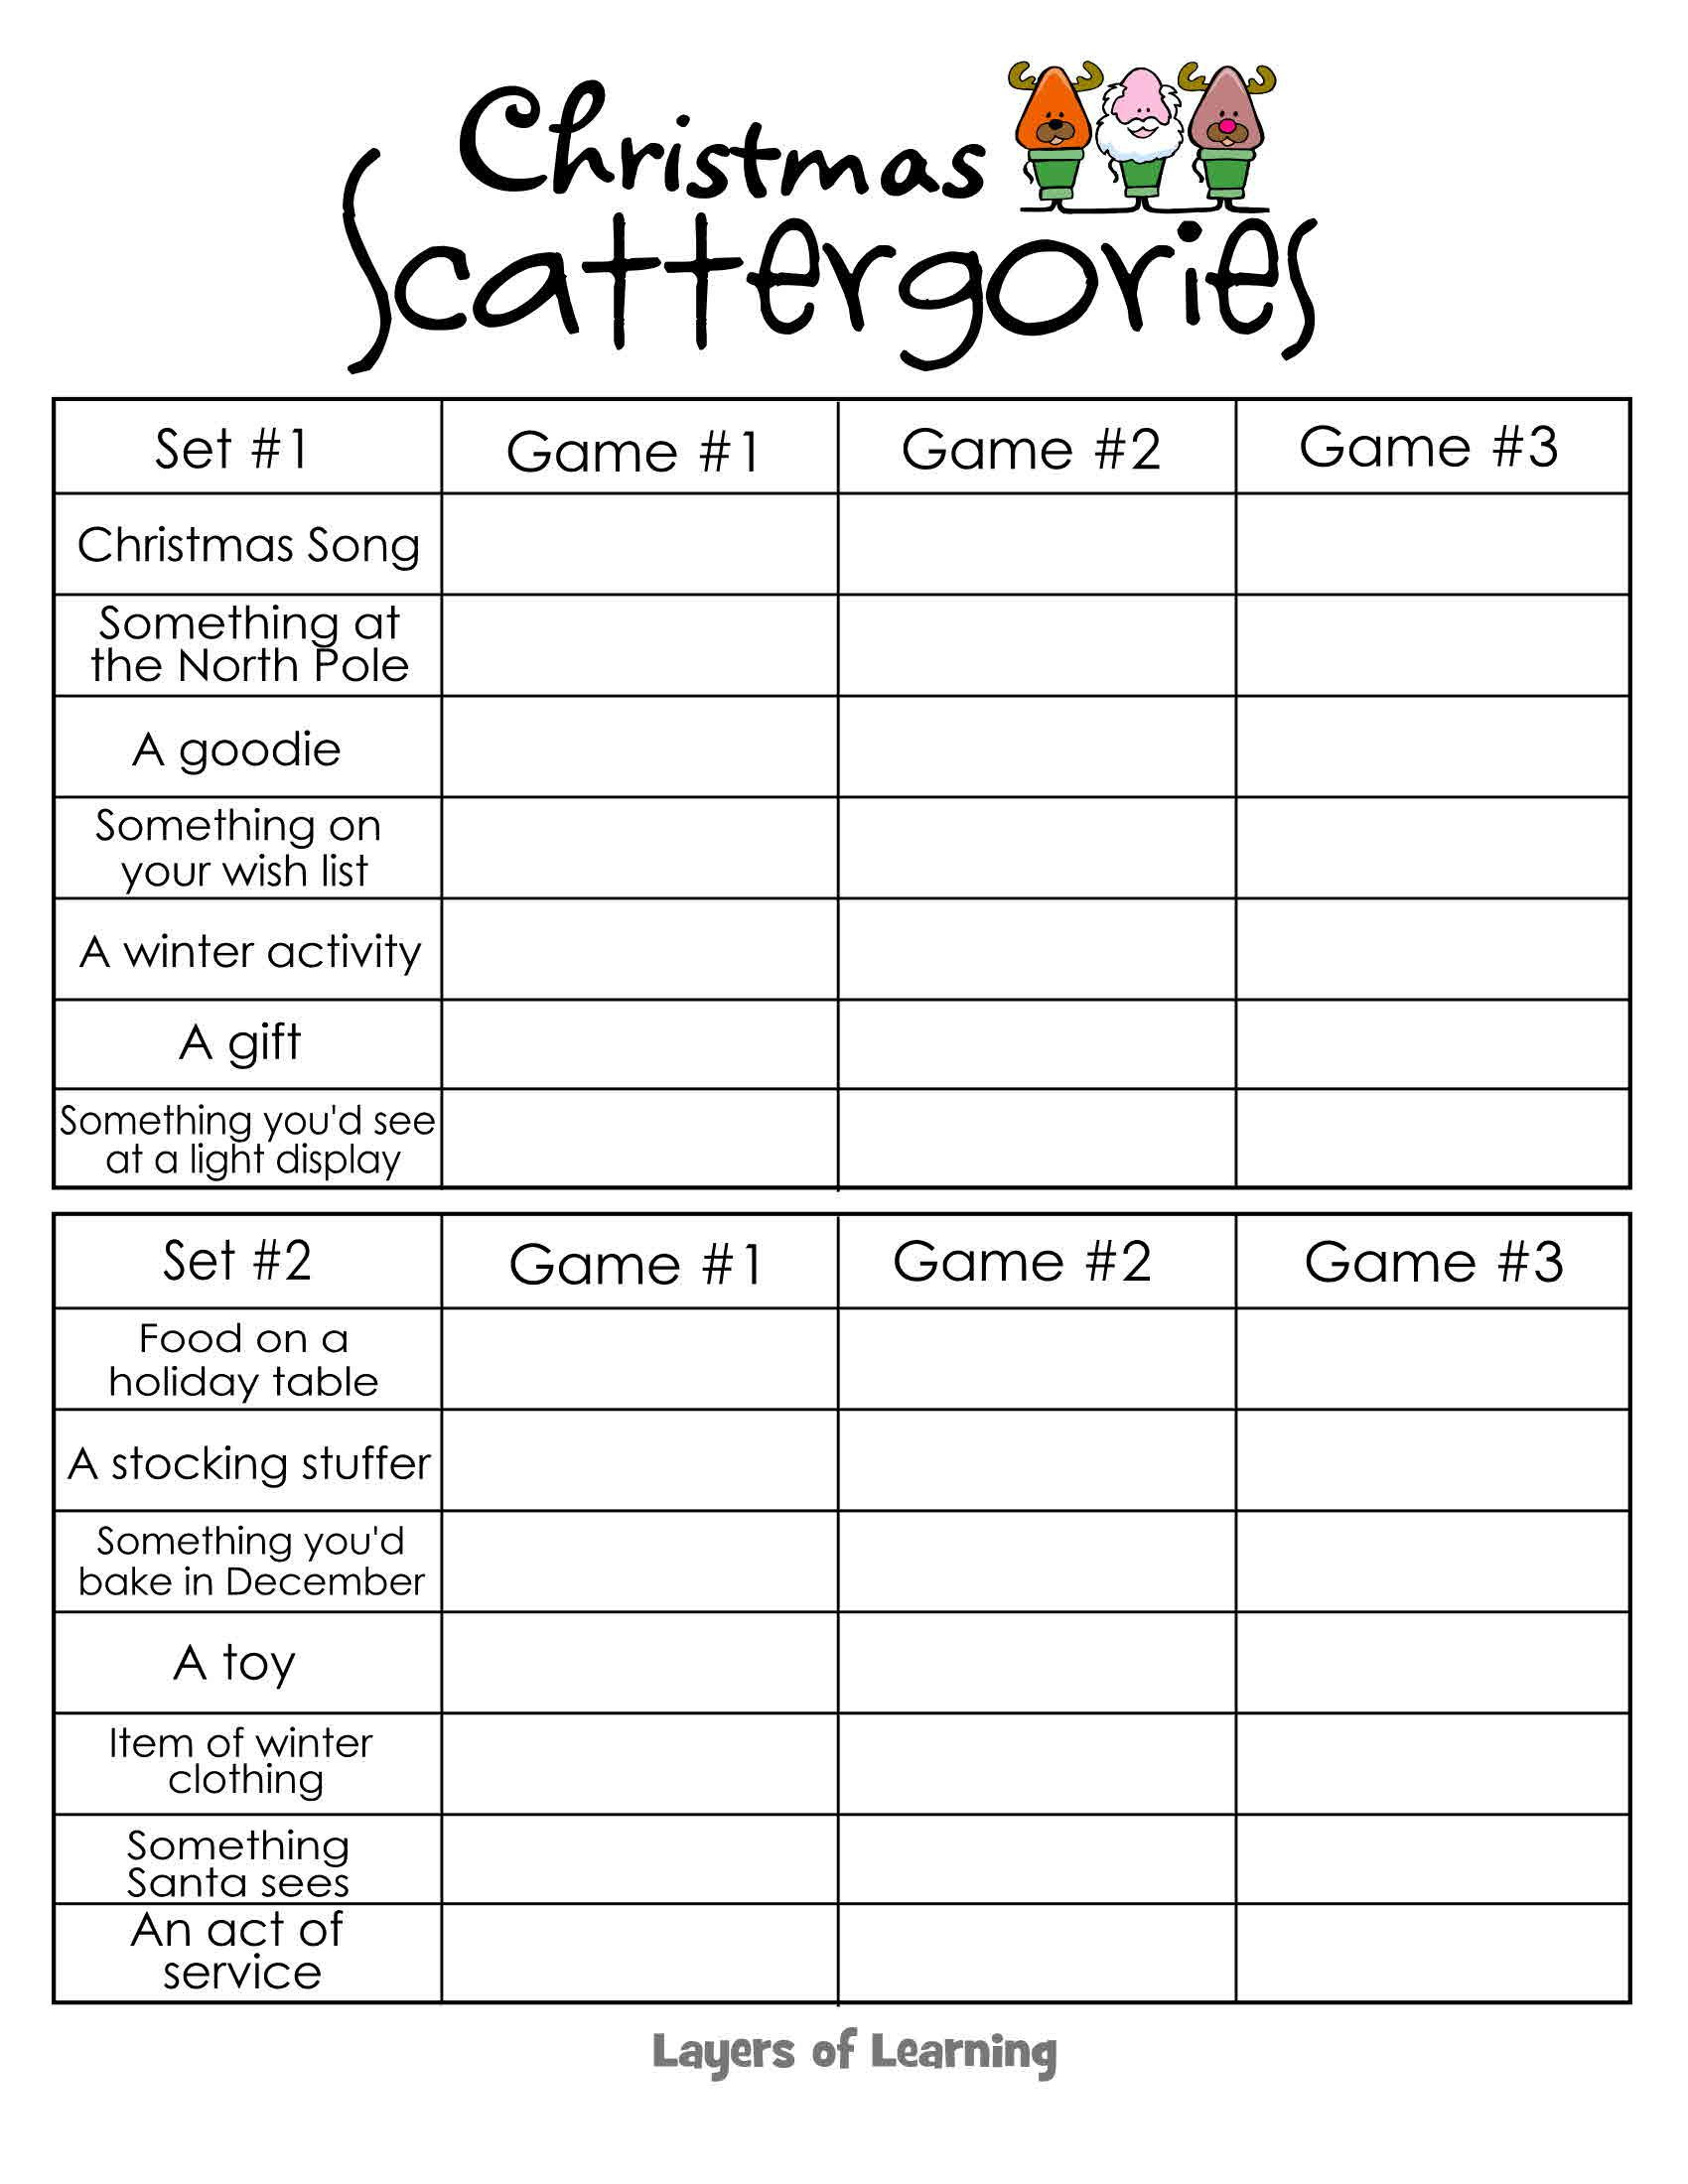 Christmas Scattergories | Homeschool Holidayopedia | Pinterest - Free Printable Religious Christmas Games